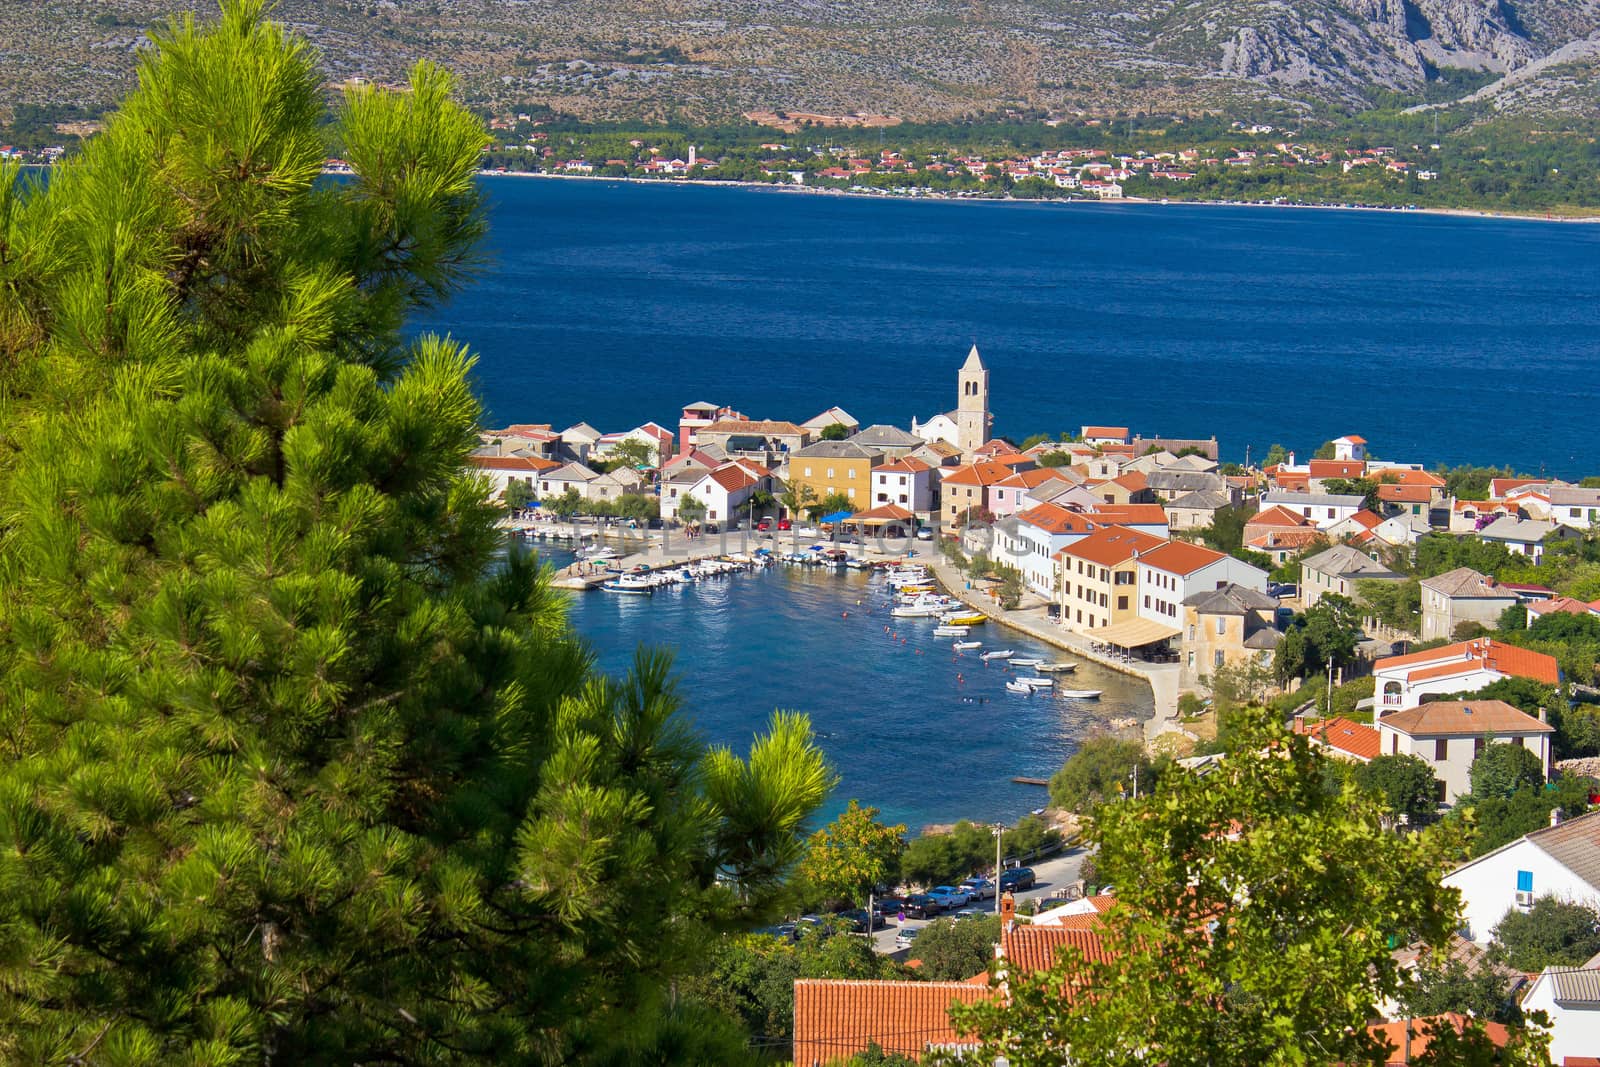 Adriatic town of Vinjerac aerial view by xbrchx